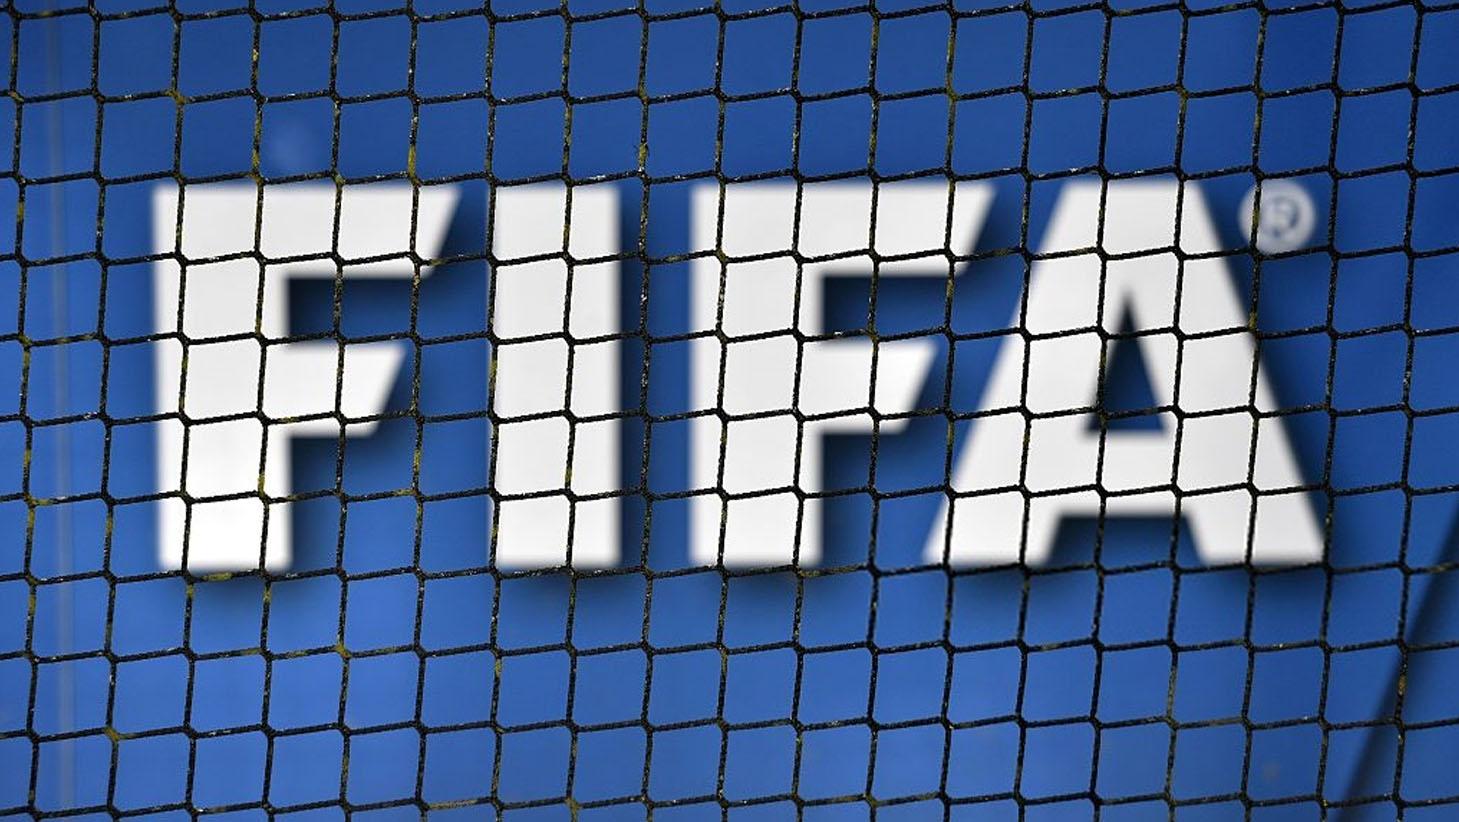 FIFA (Federation Internationale de Football Association) Copyright: FABRICE COFFRINI/AFP/Getty Images